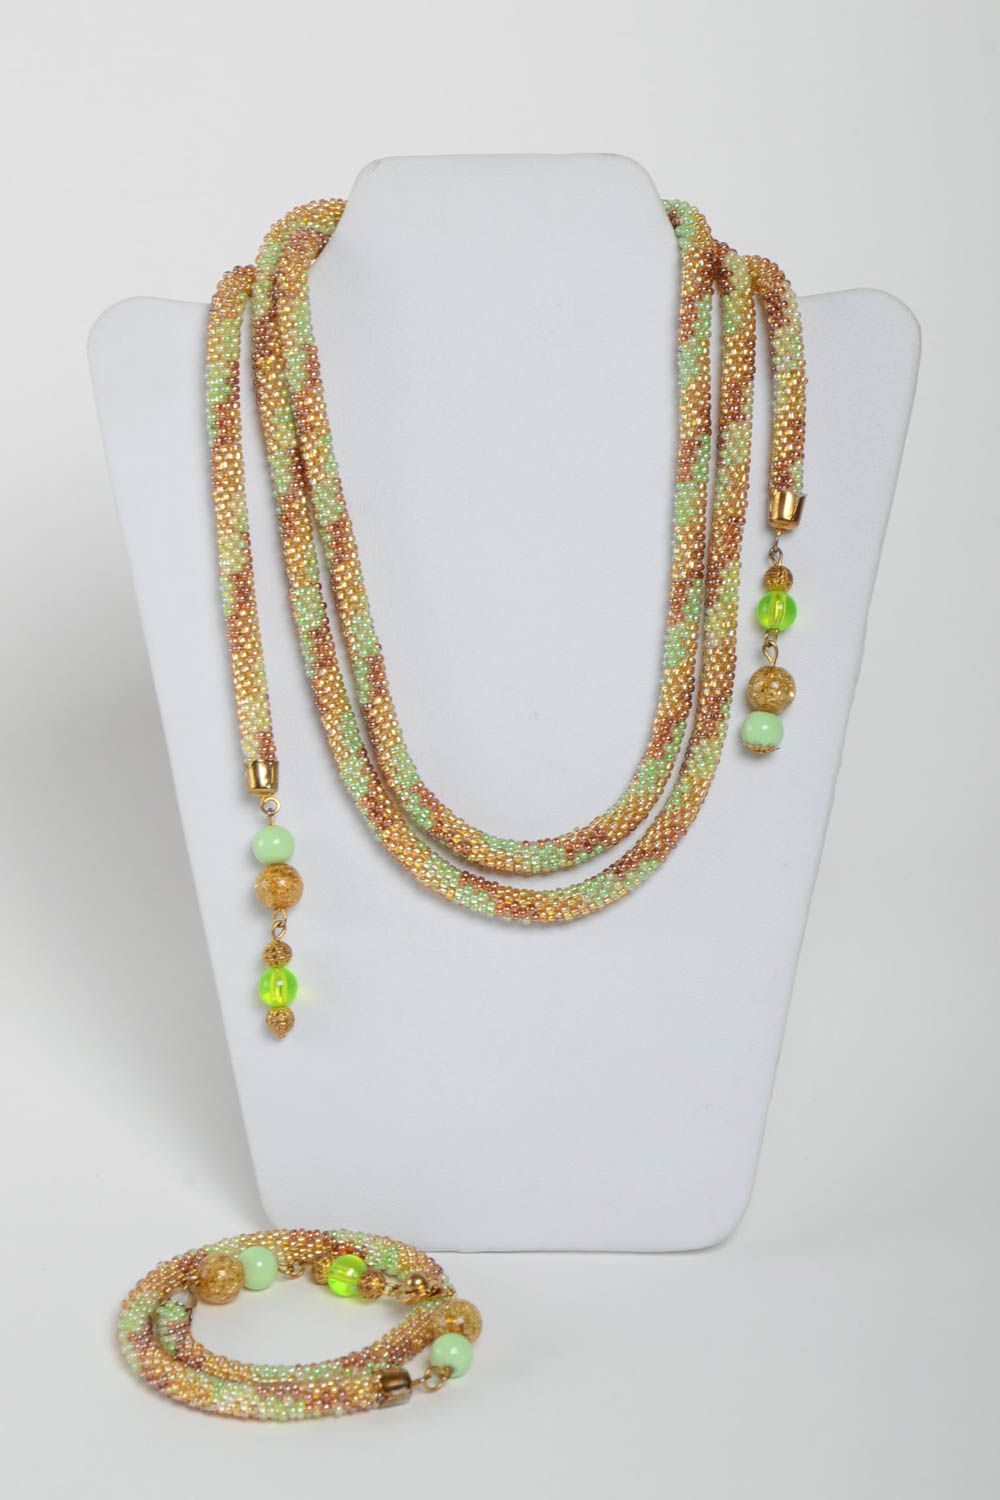 Gentle handmade beaded cord necklace and bracelet designer jewelry for women photo 2